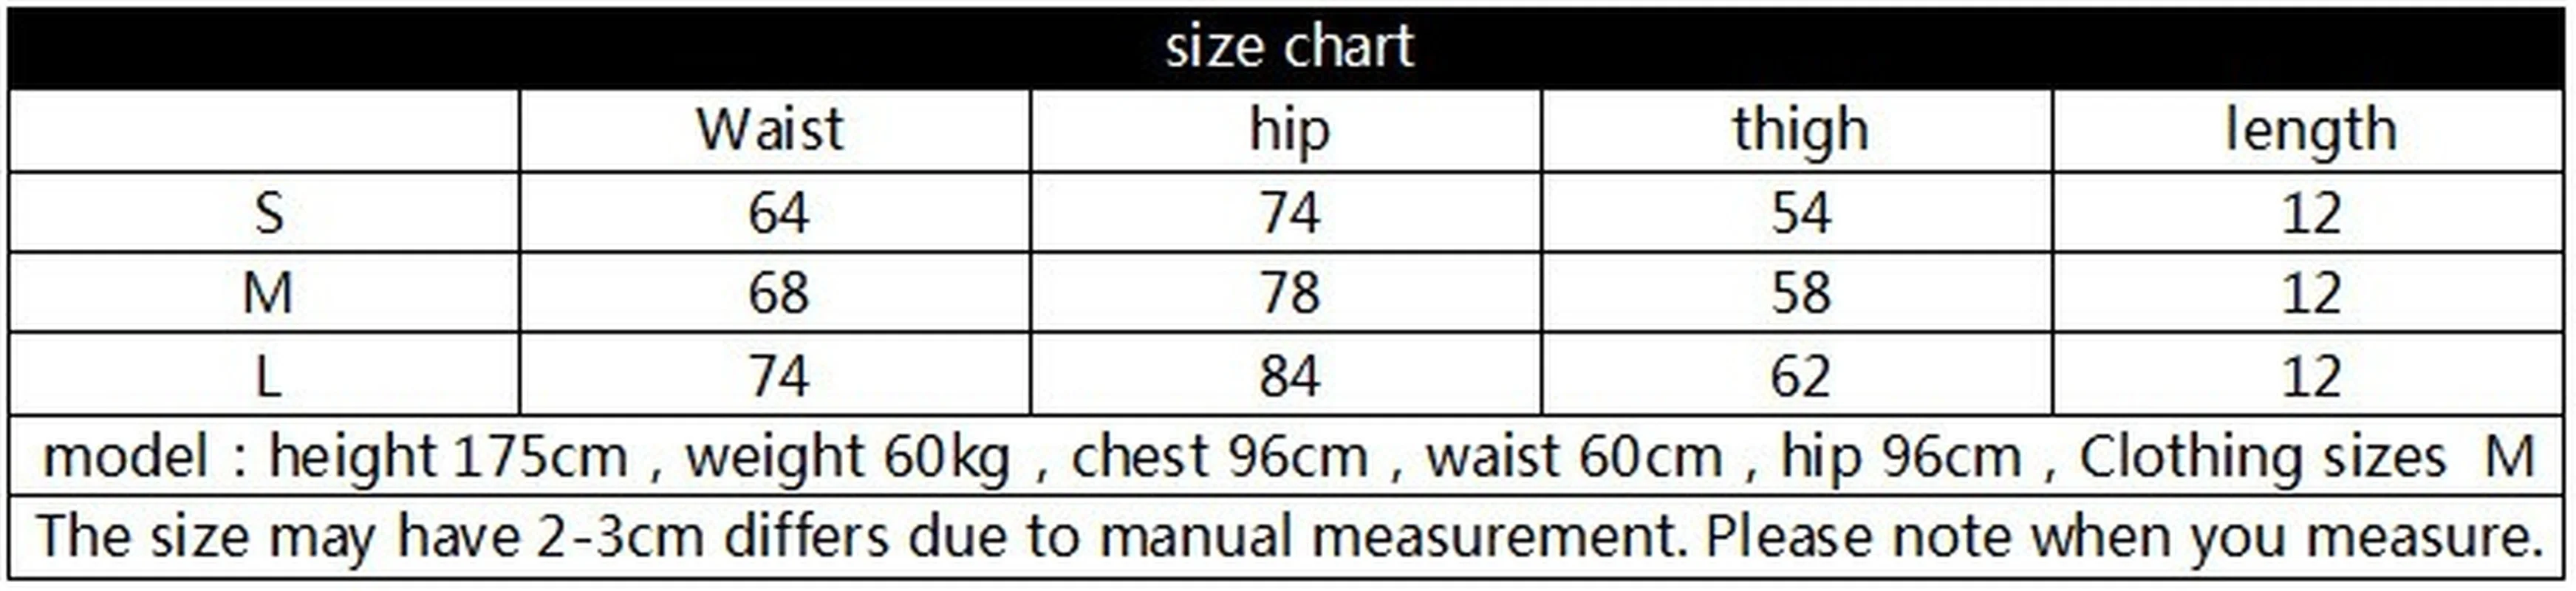 Model height. Model.length. Waistline 66 Jeans. Get model extents Size.